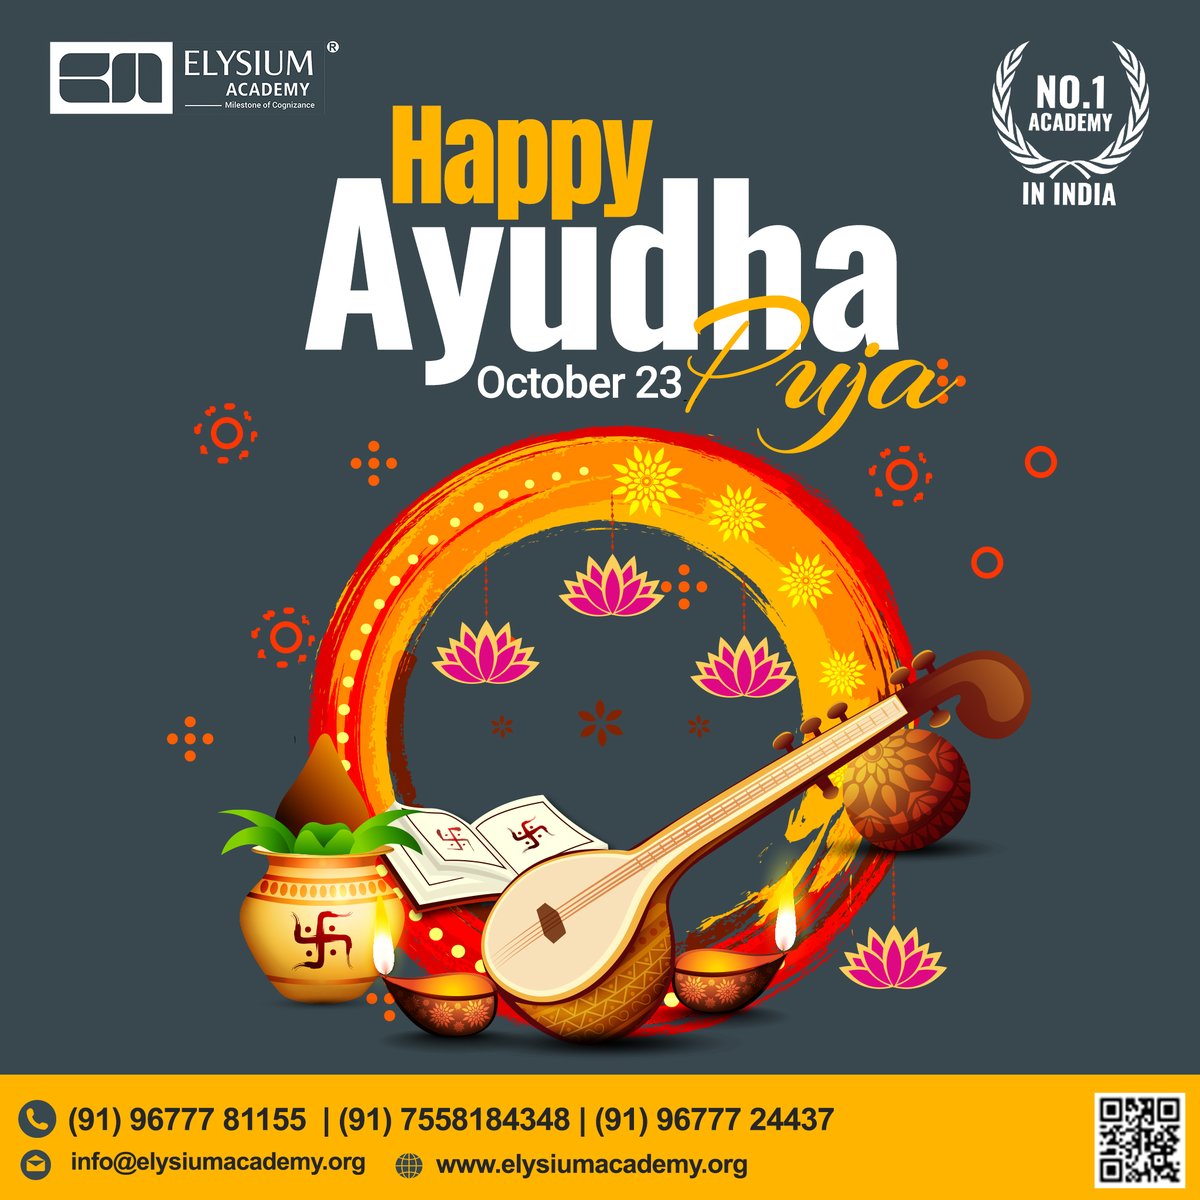 🎉 Celebrating Ayudha Puja 🎉

Wishing you a day filled with joy, prosperity, and blessings! ✨

#ayudhapooja #ayudhapuja #festival #vijayadasami #ayudhapooja #aayudhapooja #ayudhapoojai #ayudhapooja2023 #ayudhapuja2023 #vijayadasami2023 #Elysiumacademy